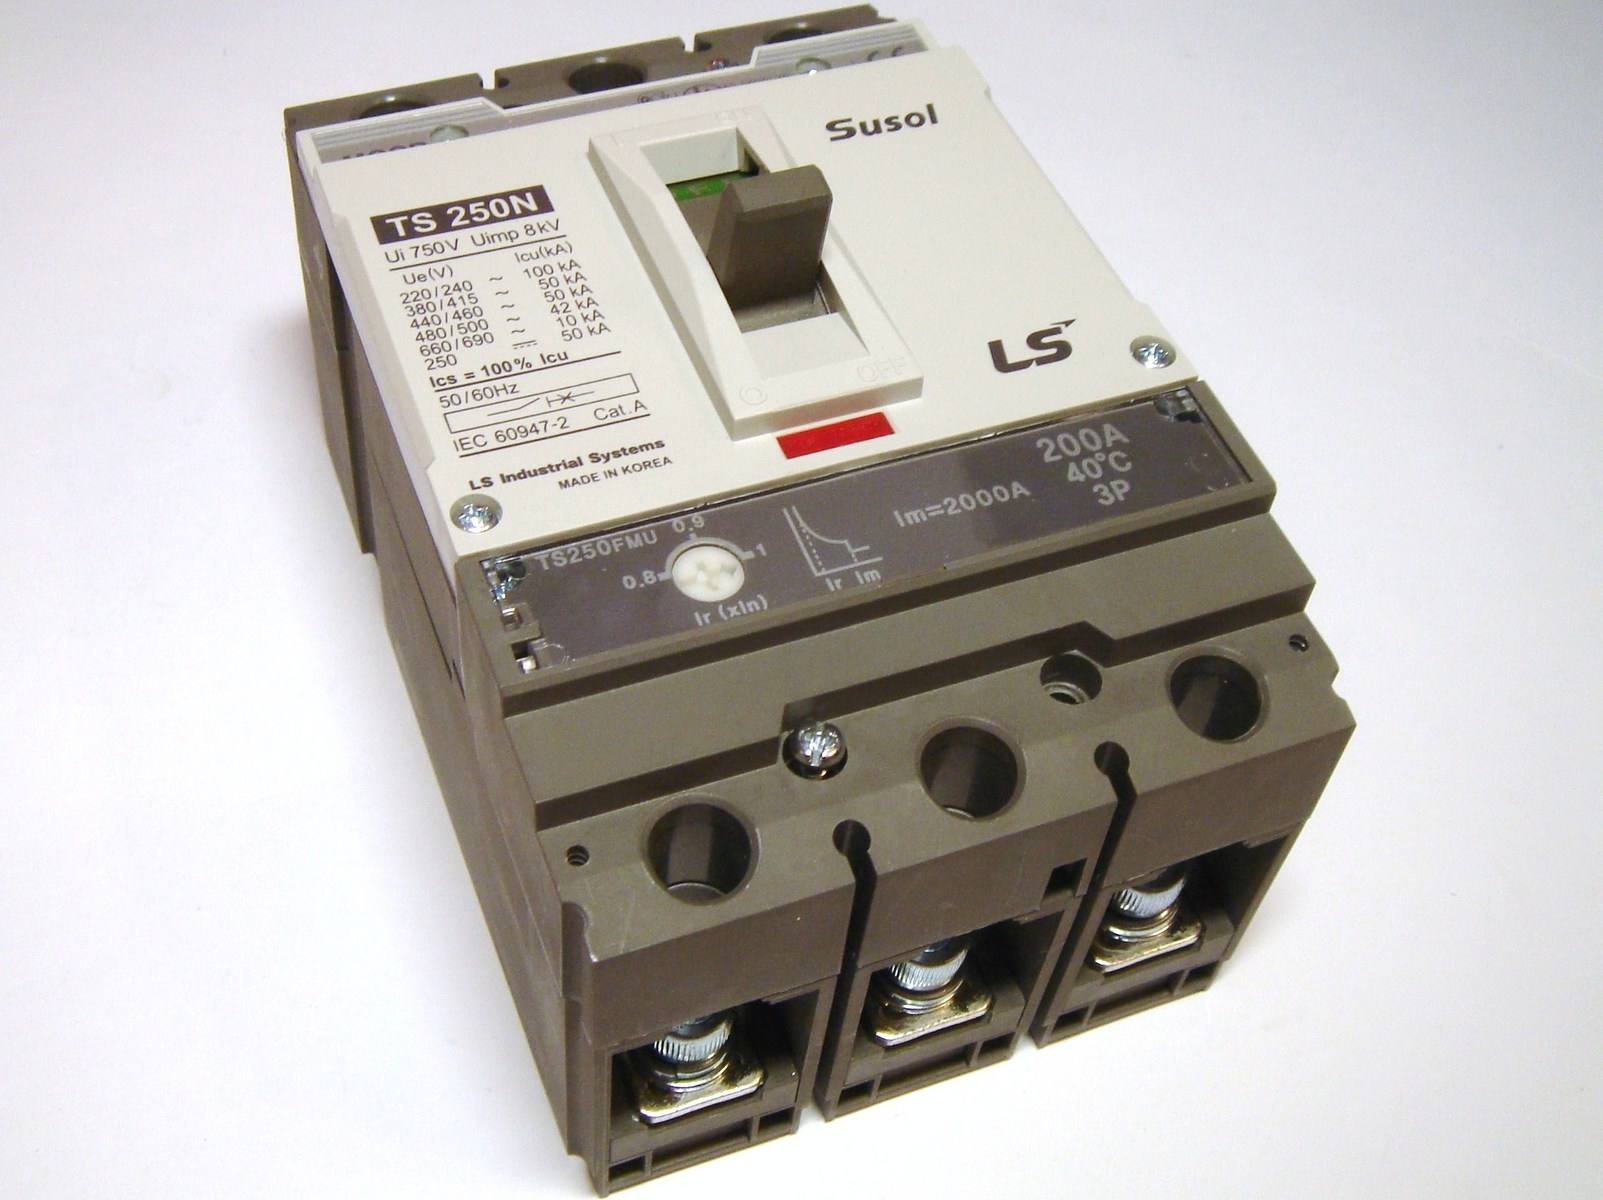 Автоматические выключатели спб. Автоматический выключатель ts250n (50ka) FMU 250a 3p3t. Автоматический выключатель ва 250 ампер 3 фазный. Ва-СЭЩ ts250n. Автоматический выключатель LSIS 2500.